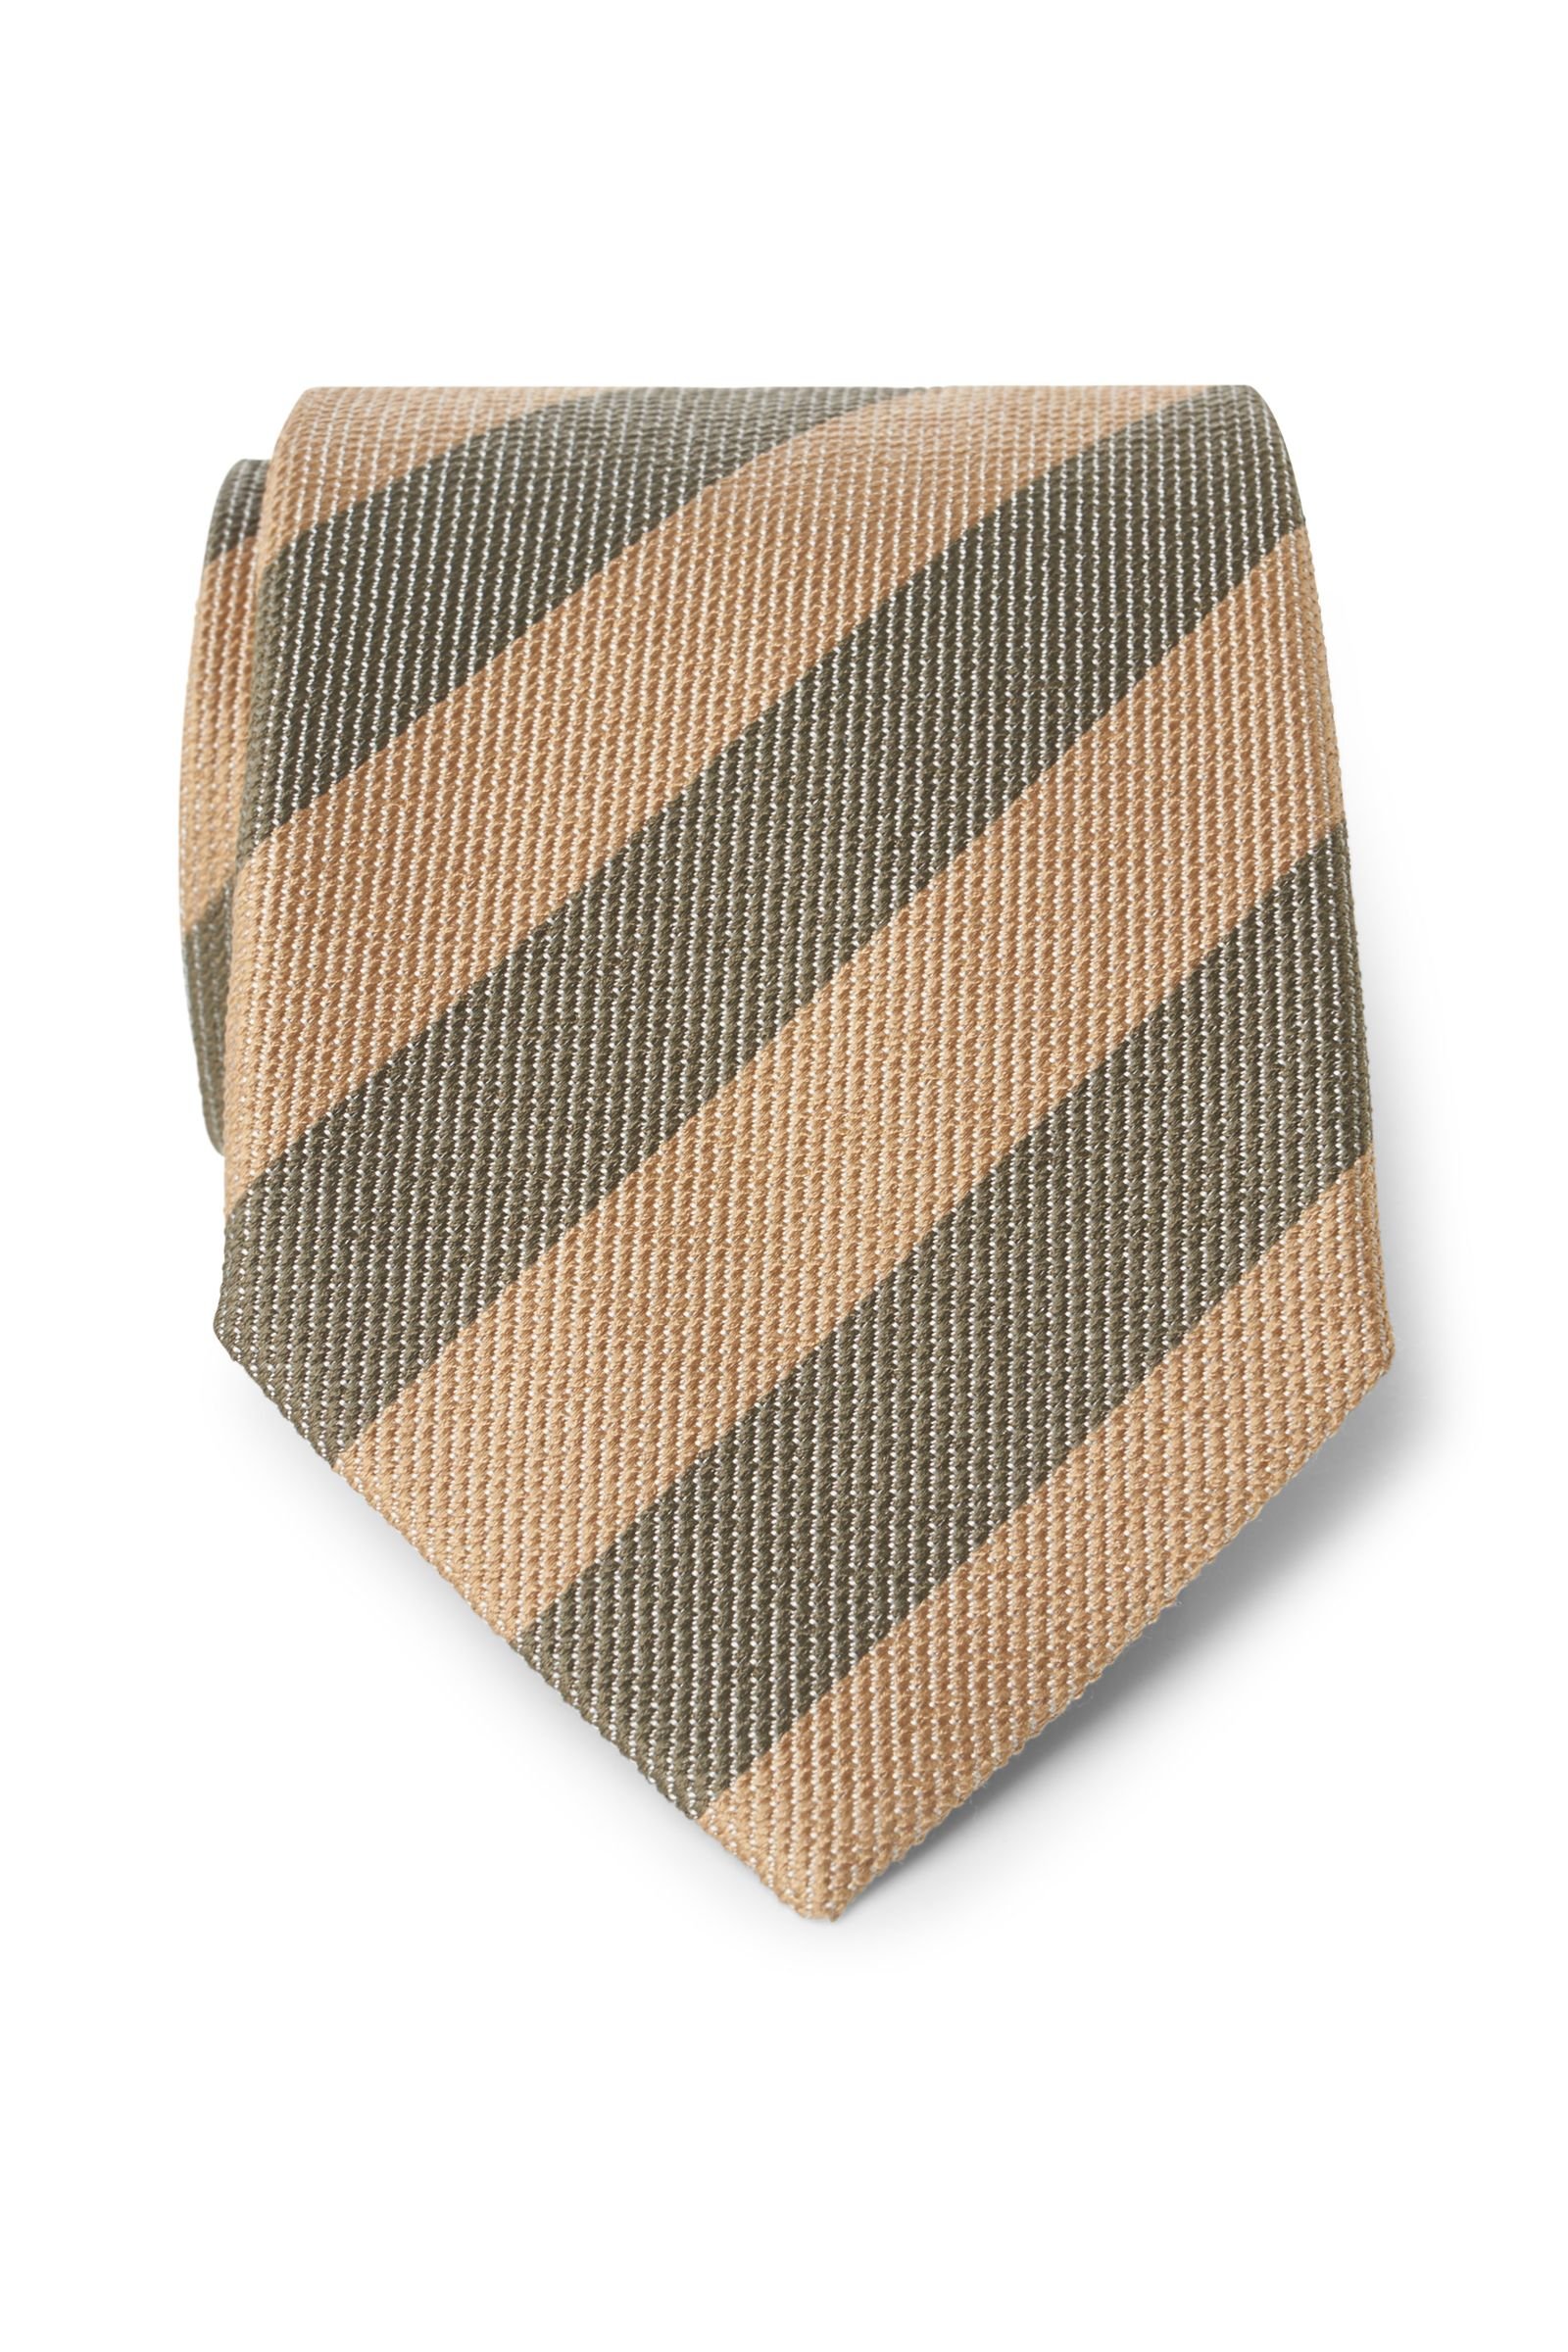 Silk tie light brown/olive striped